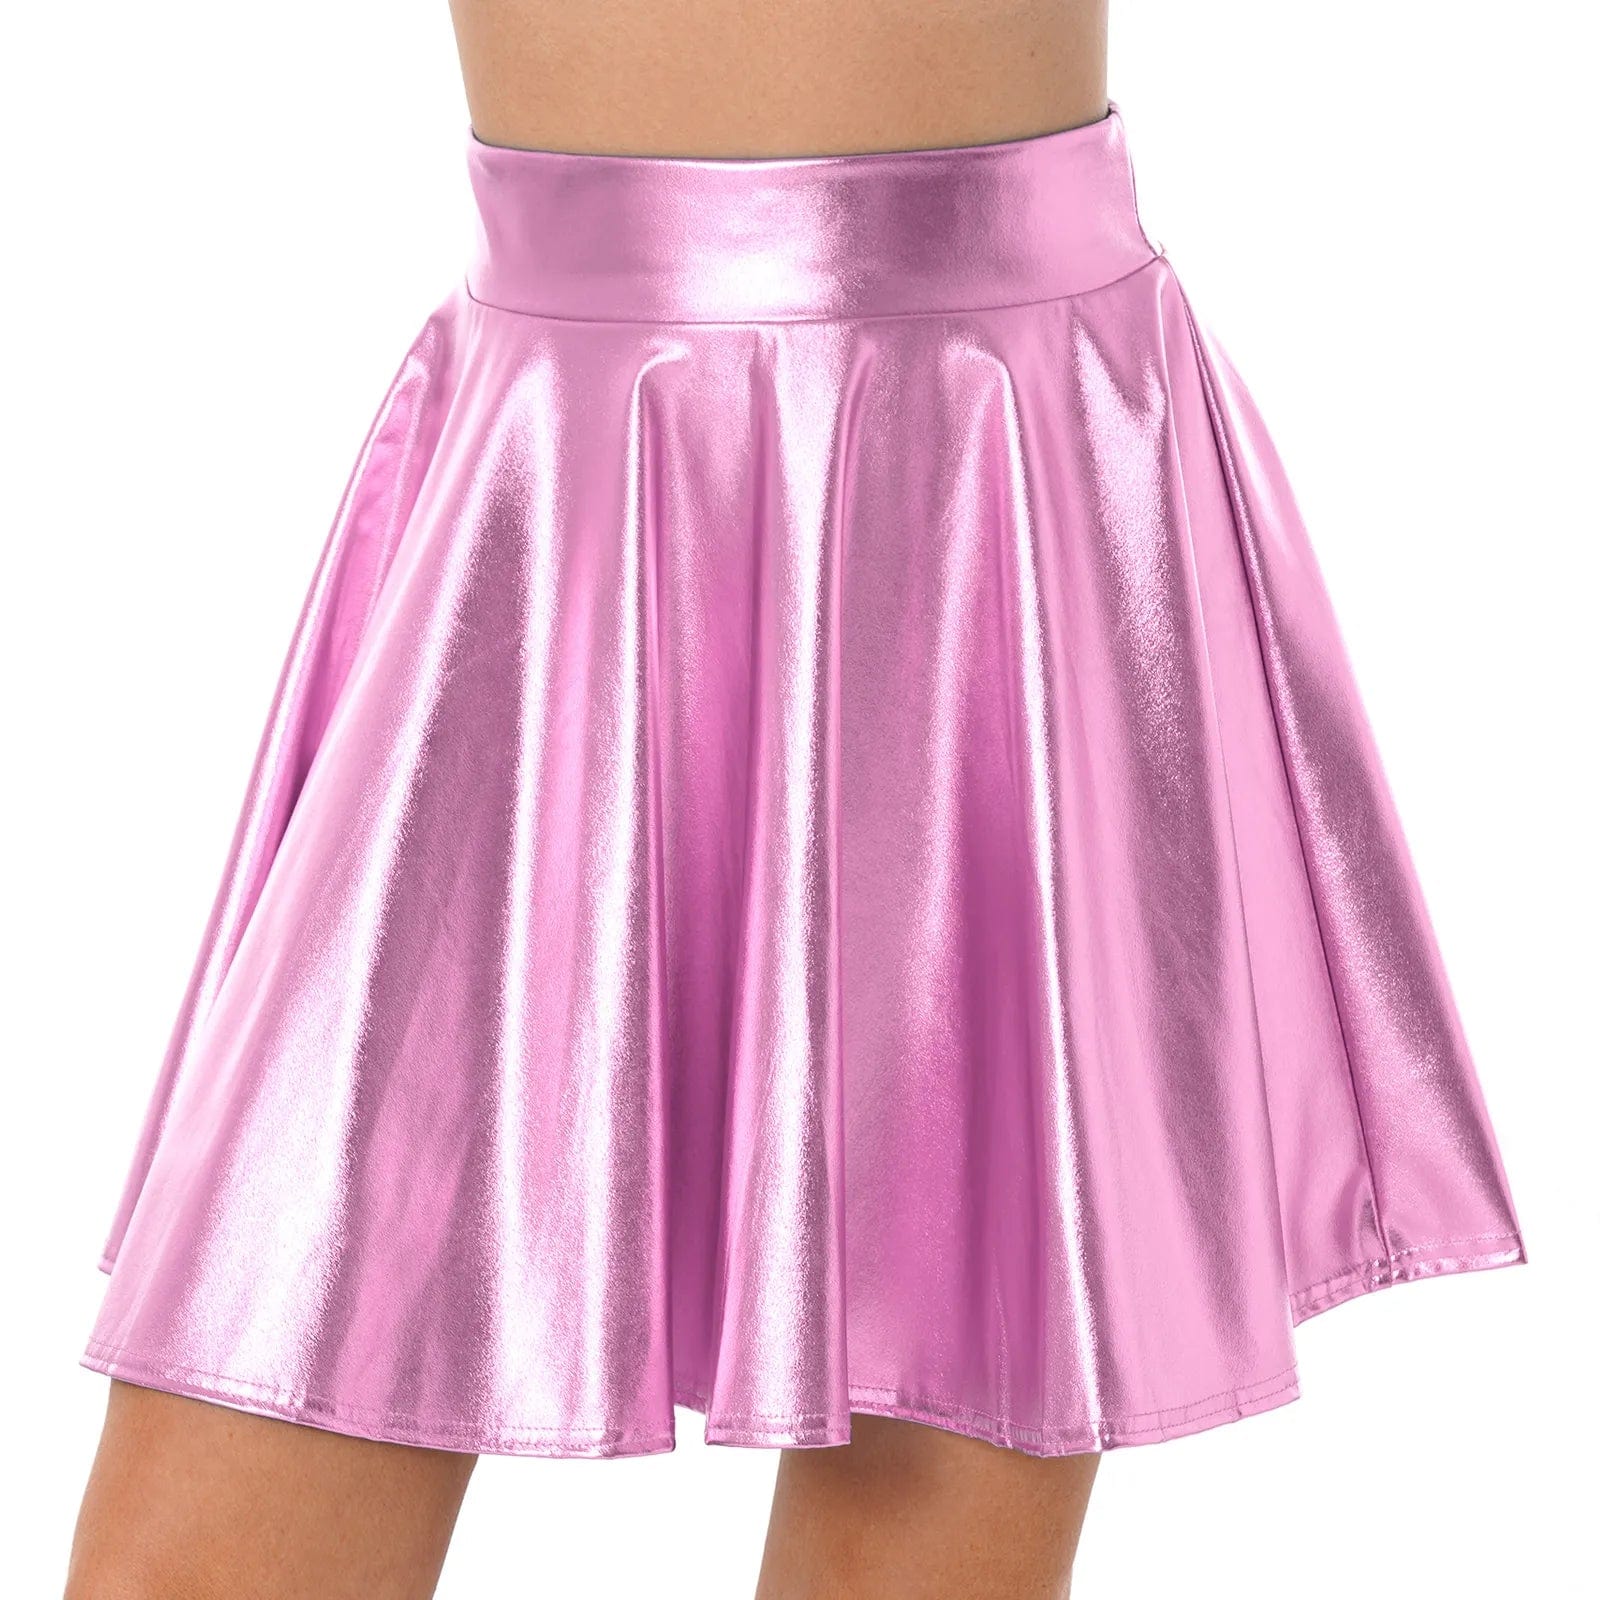 Kinky Cloth Pink B / S Metallic Shiny Camisole Skirt Sets